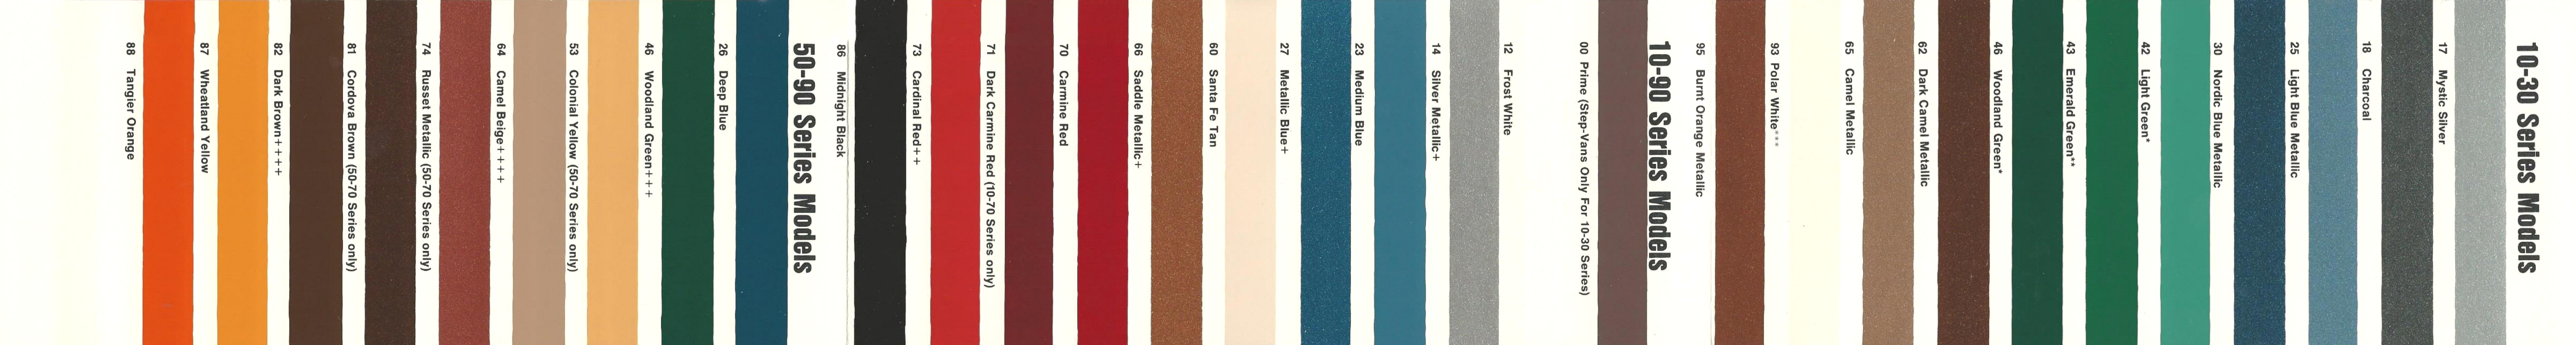 1980_Chevrolet_Trucks_Color_Chart-03-04